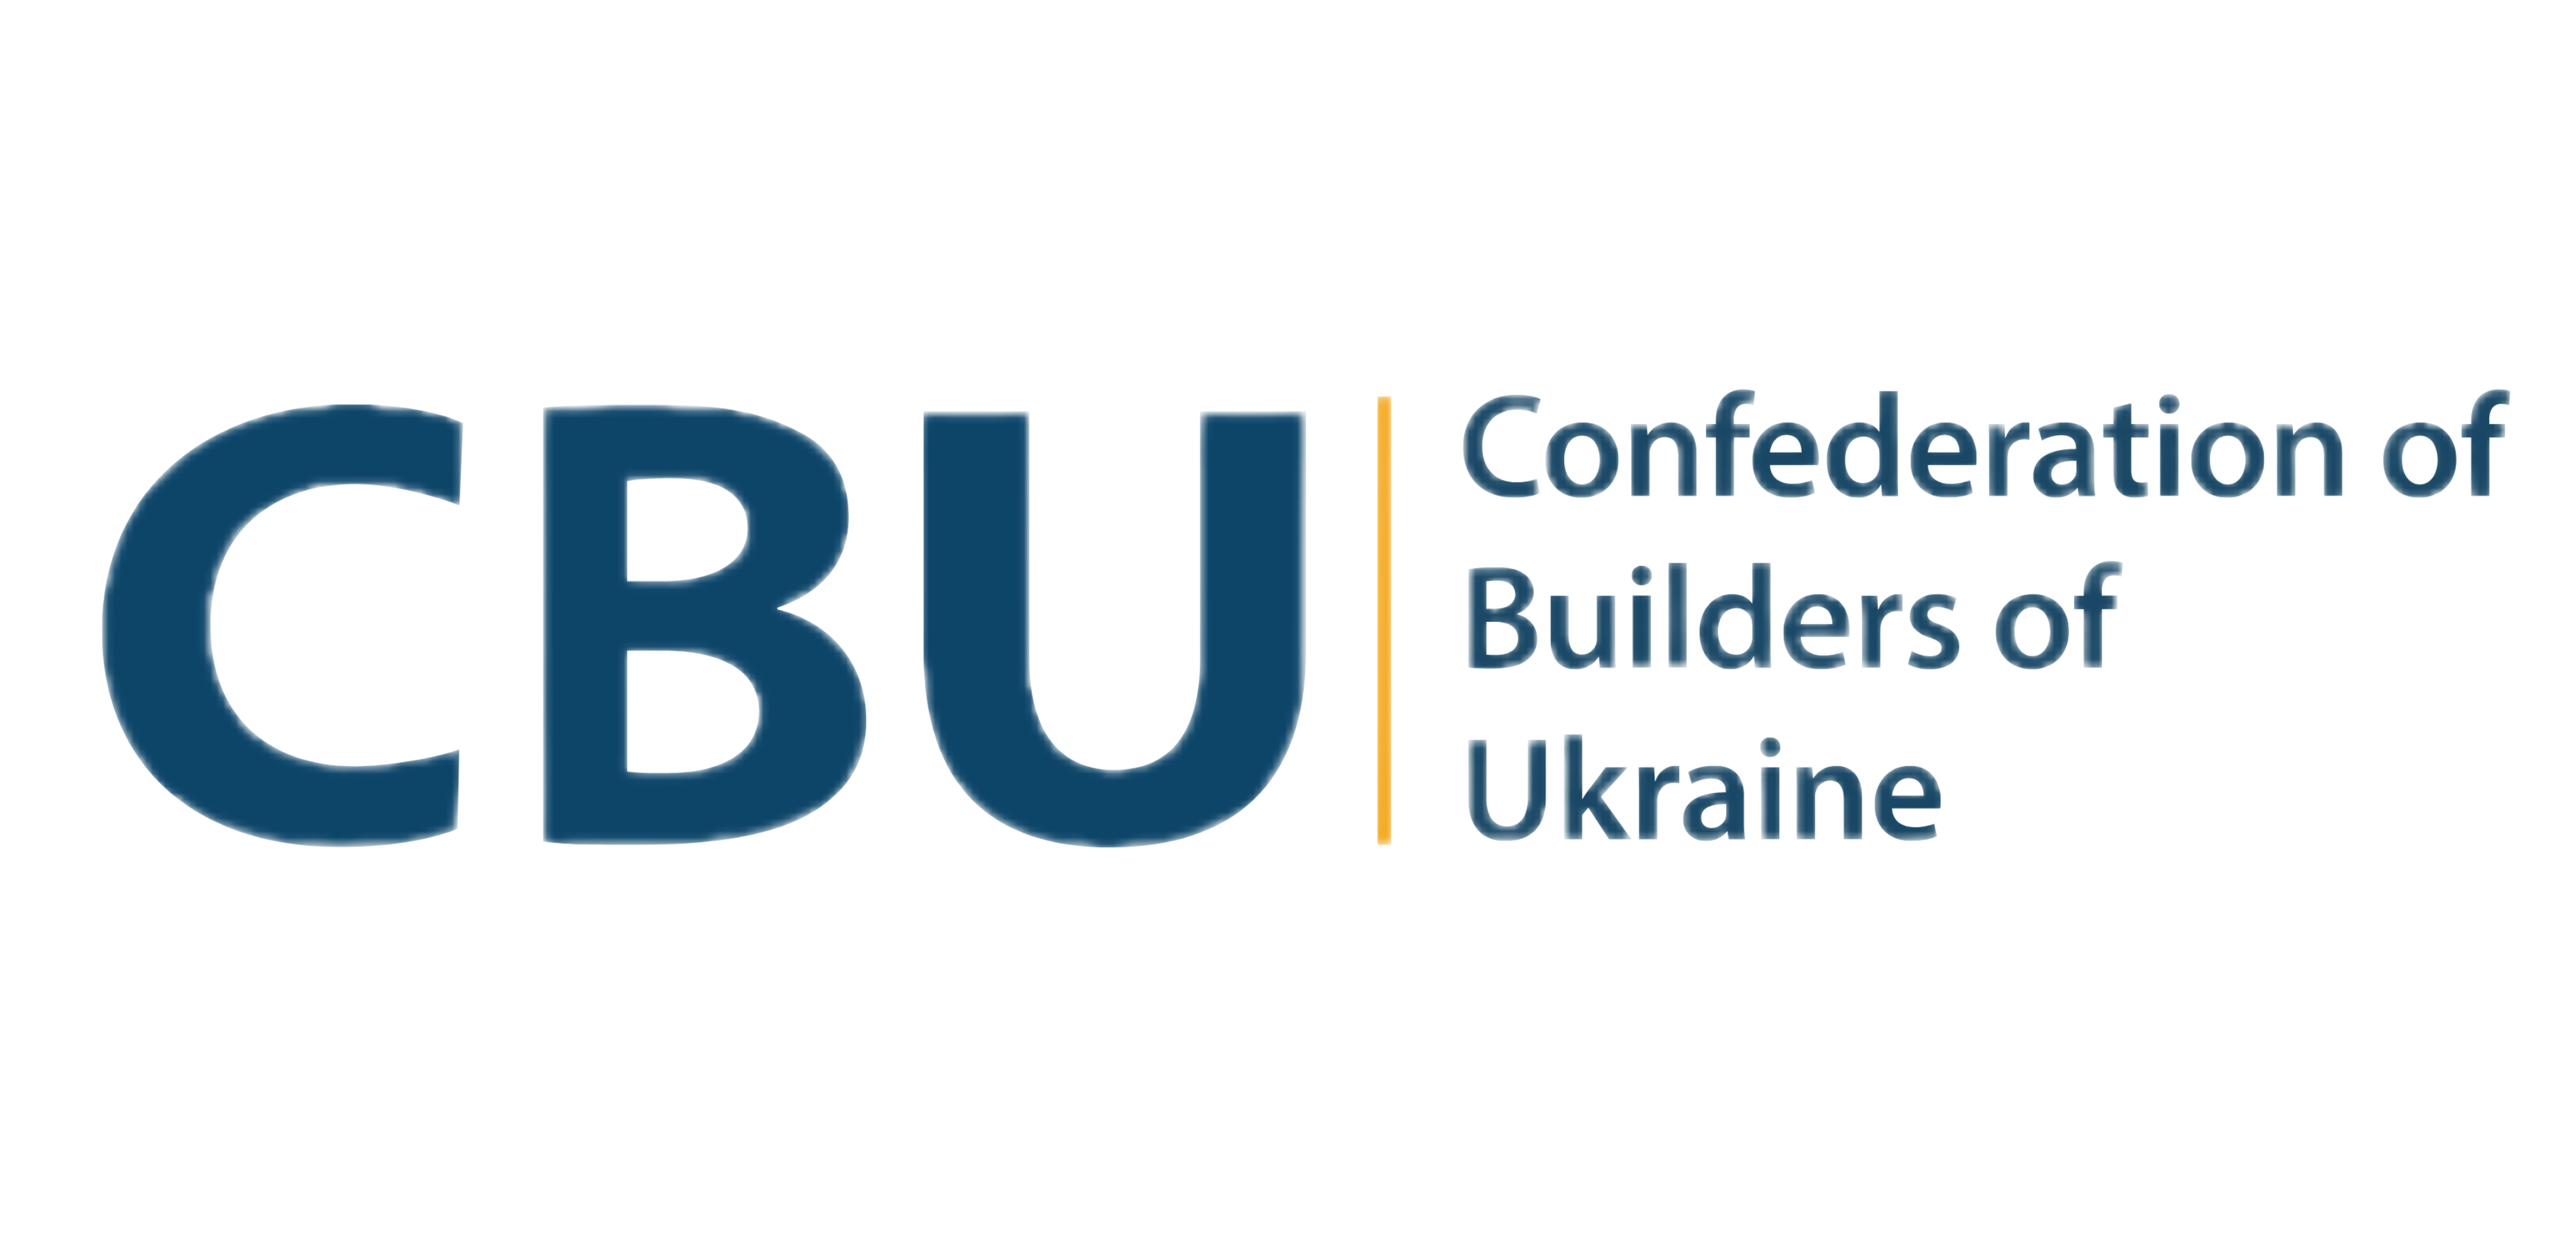 Confederation of Builders of Ukraine